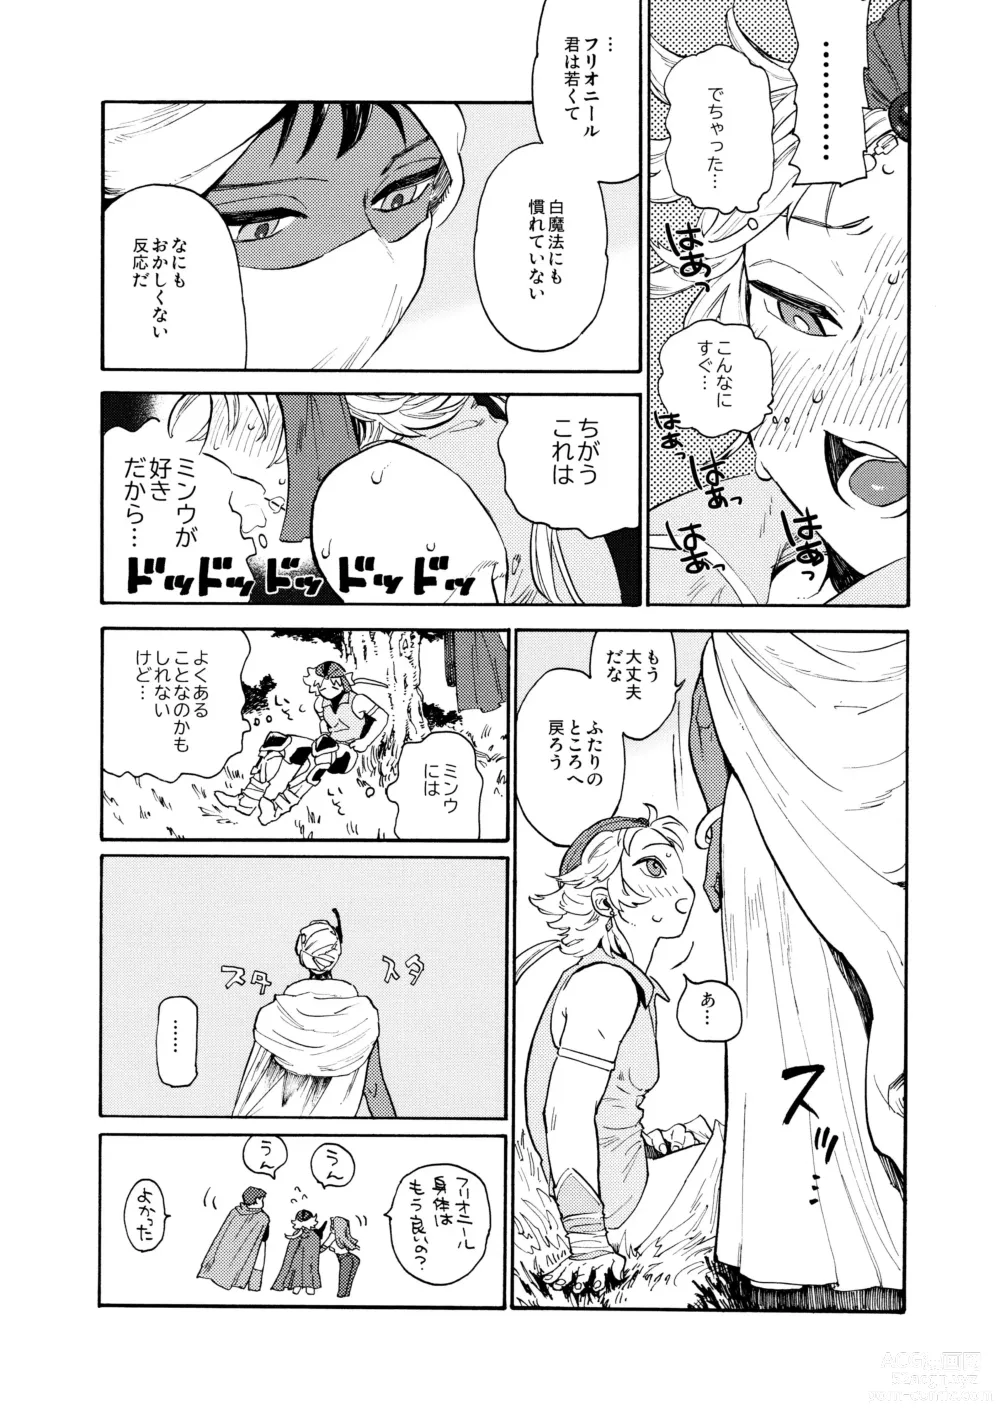 Page 11 of doujinshi Unmei no Karepi